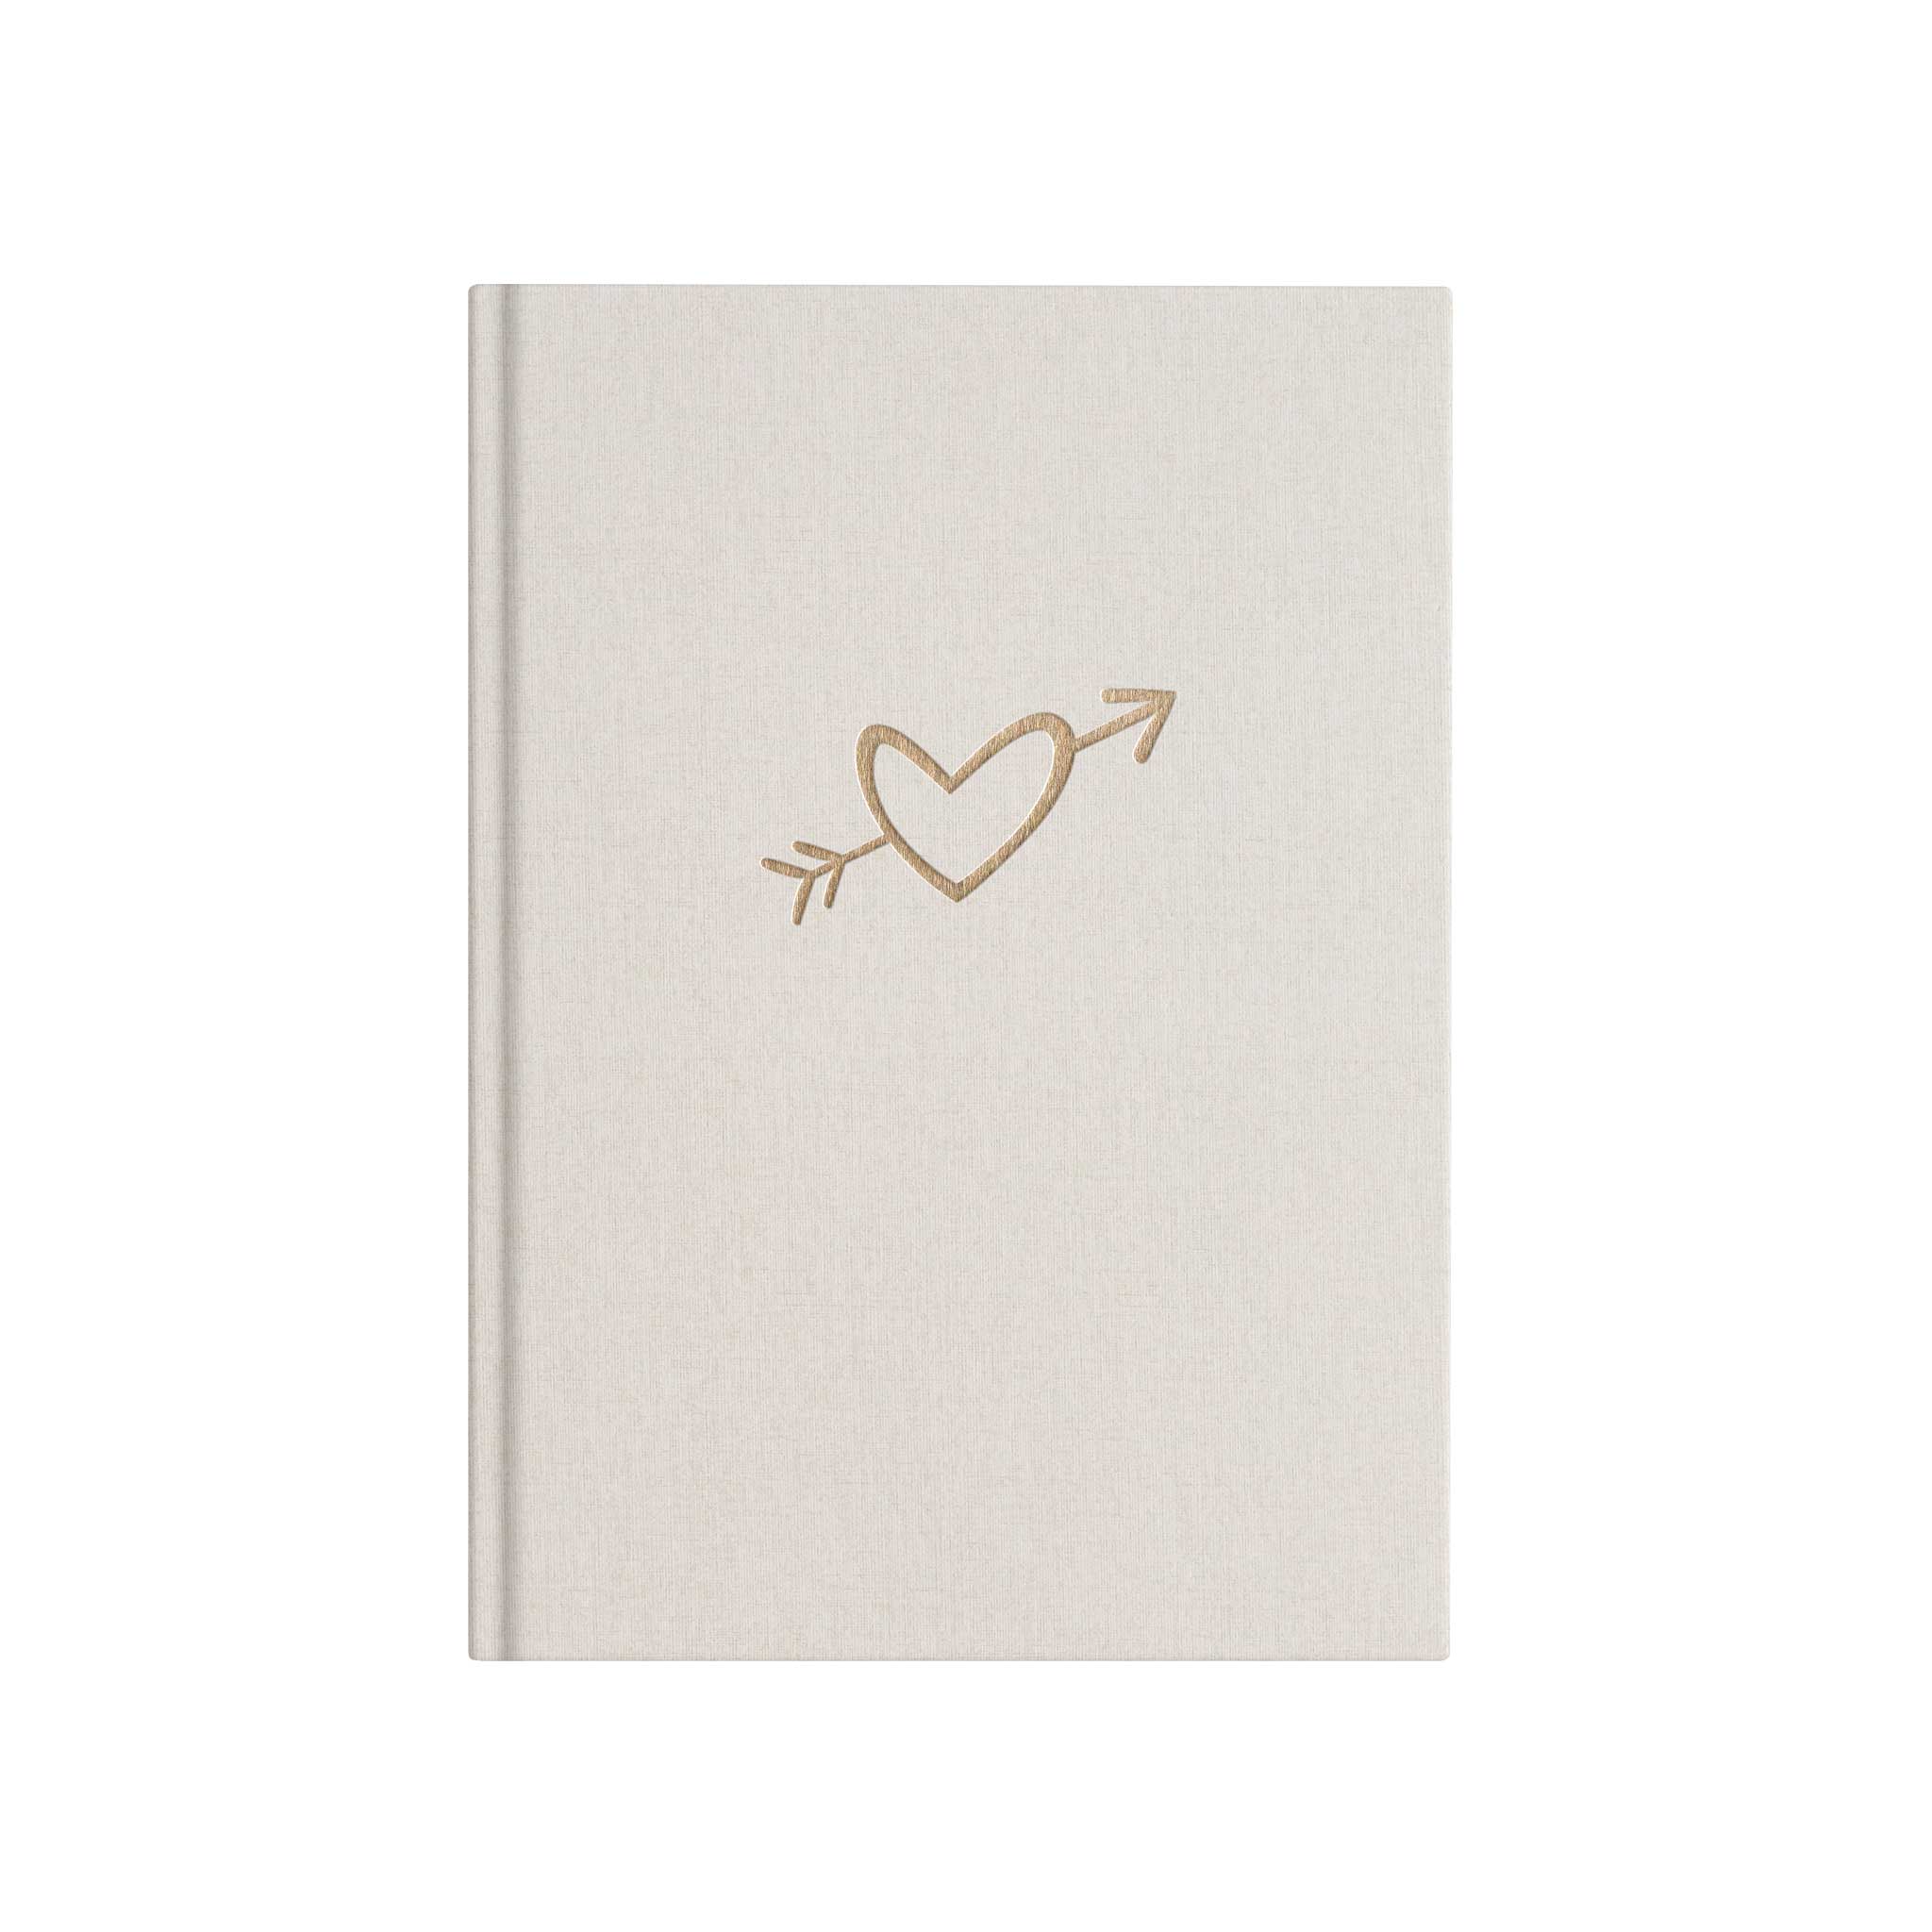 Notizbuch "Heart", A5, off white / gold, Leinencover